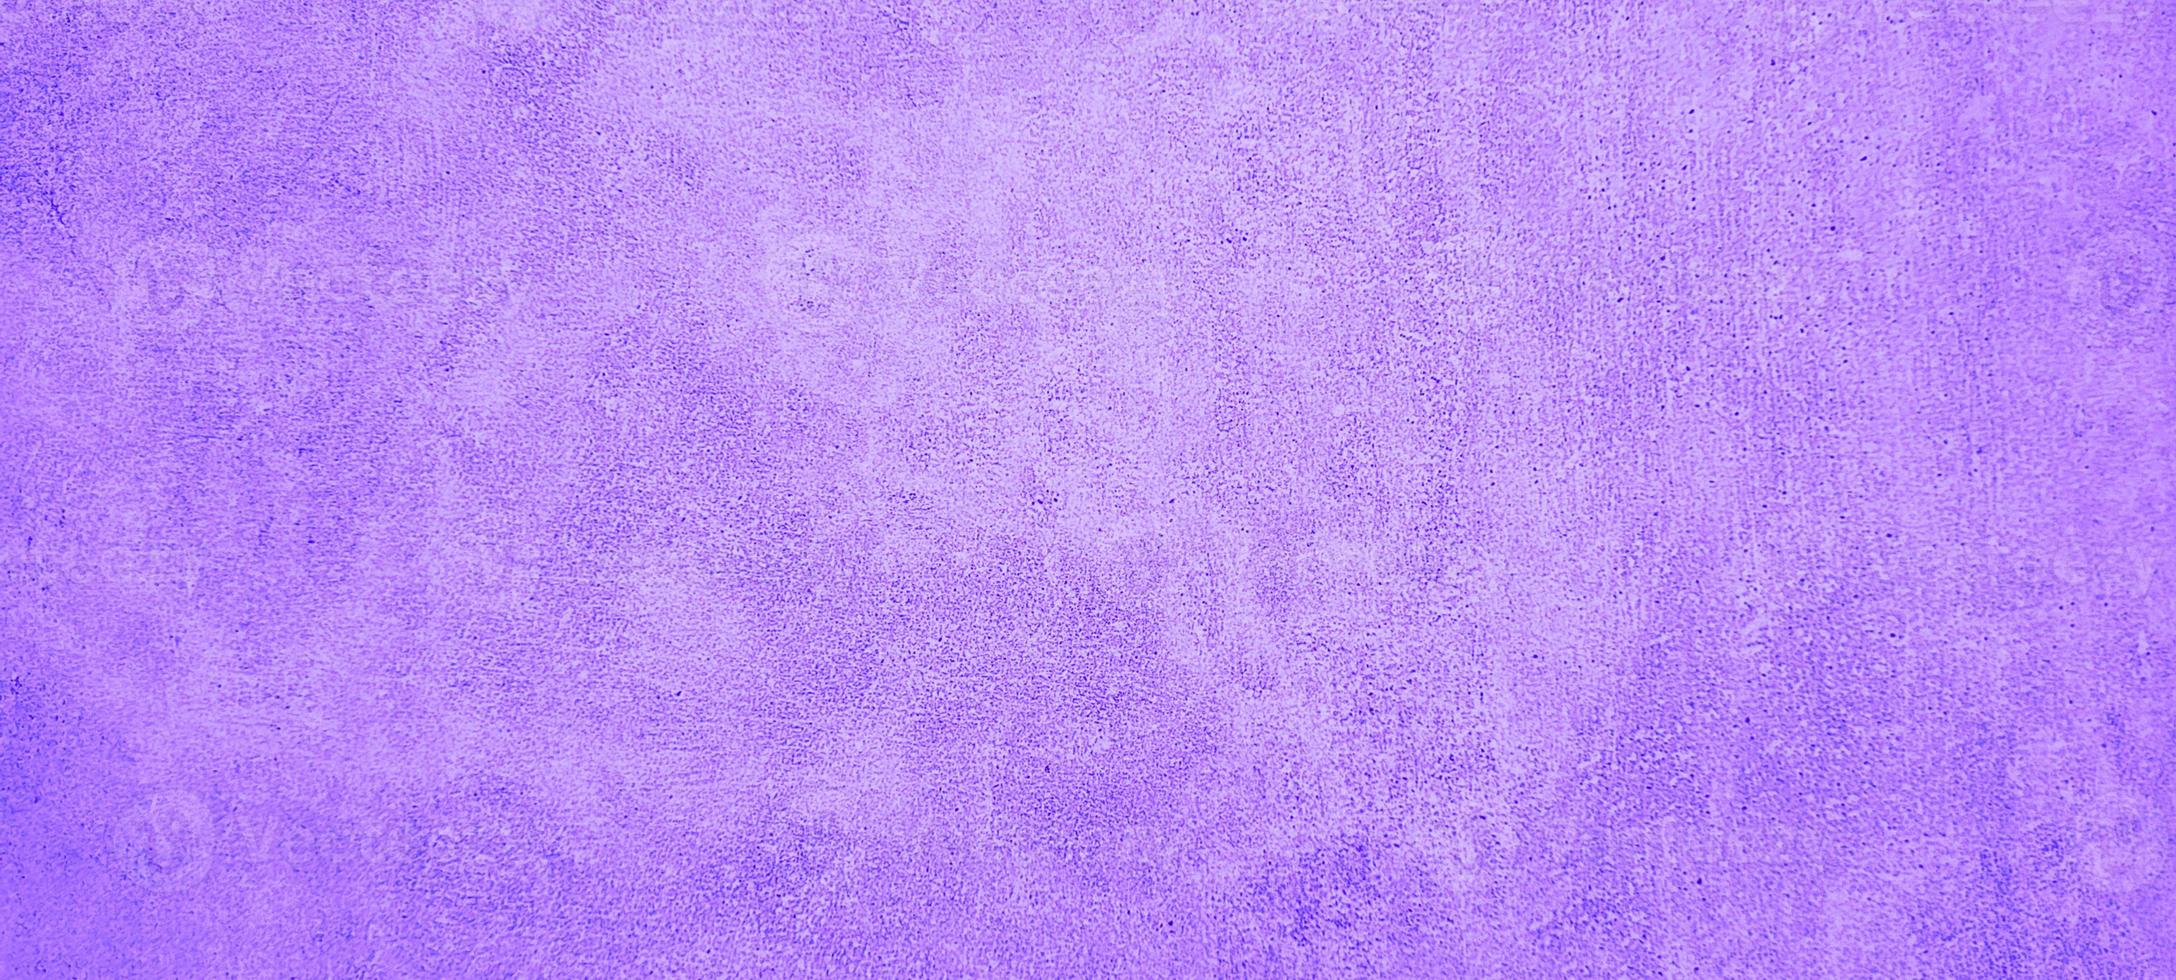 lilás roxa rústico textura fundo foto